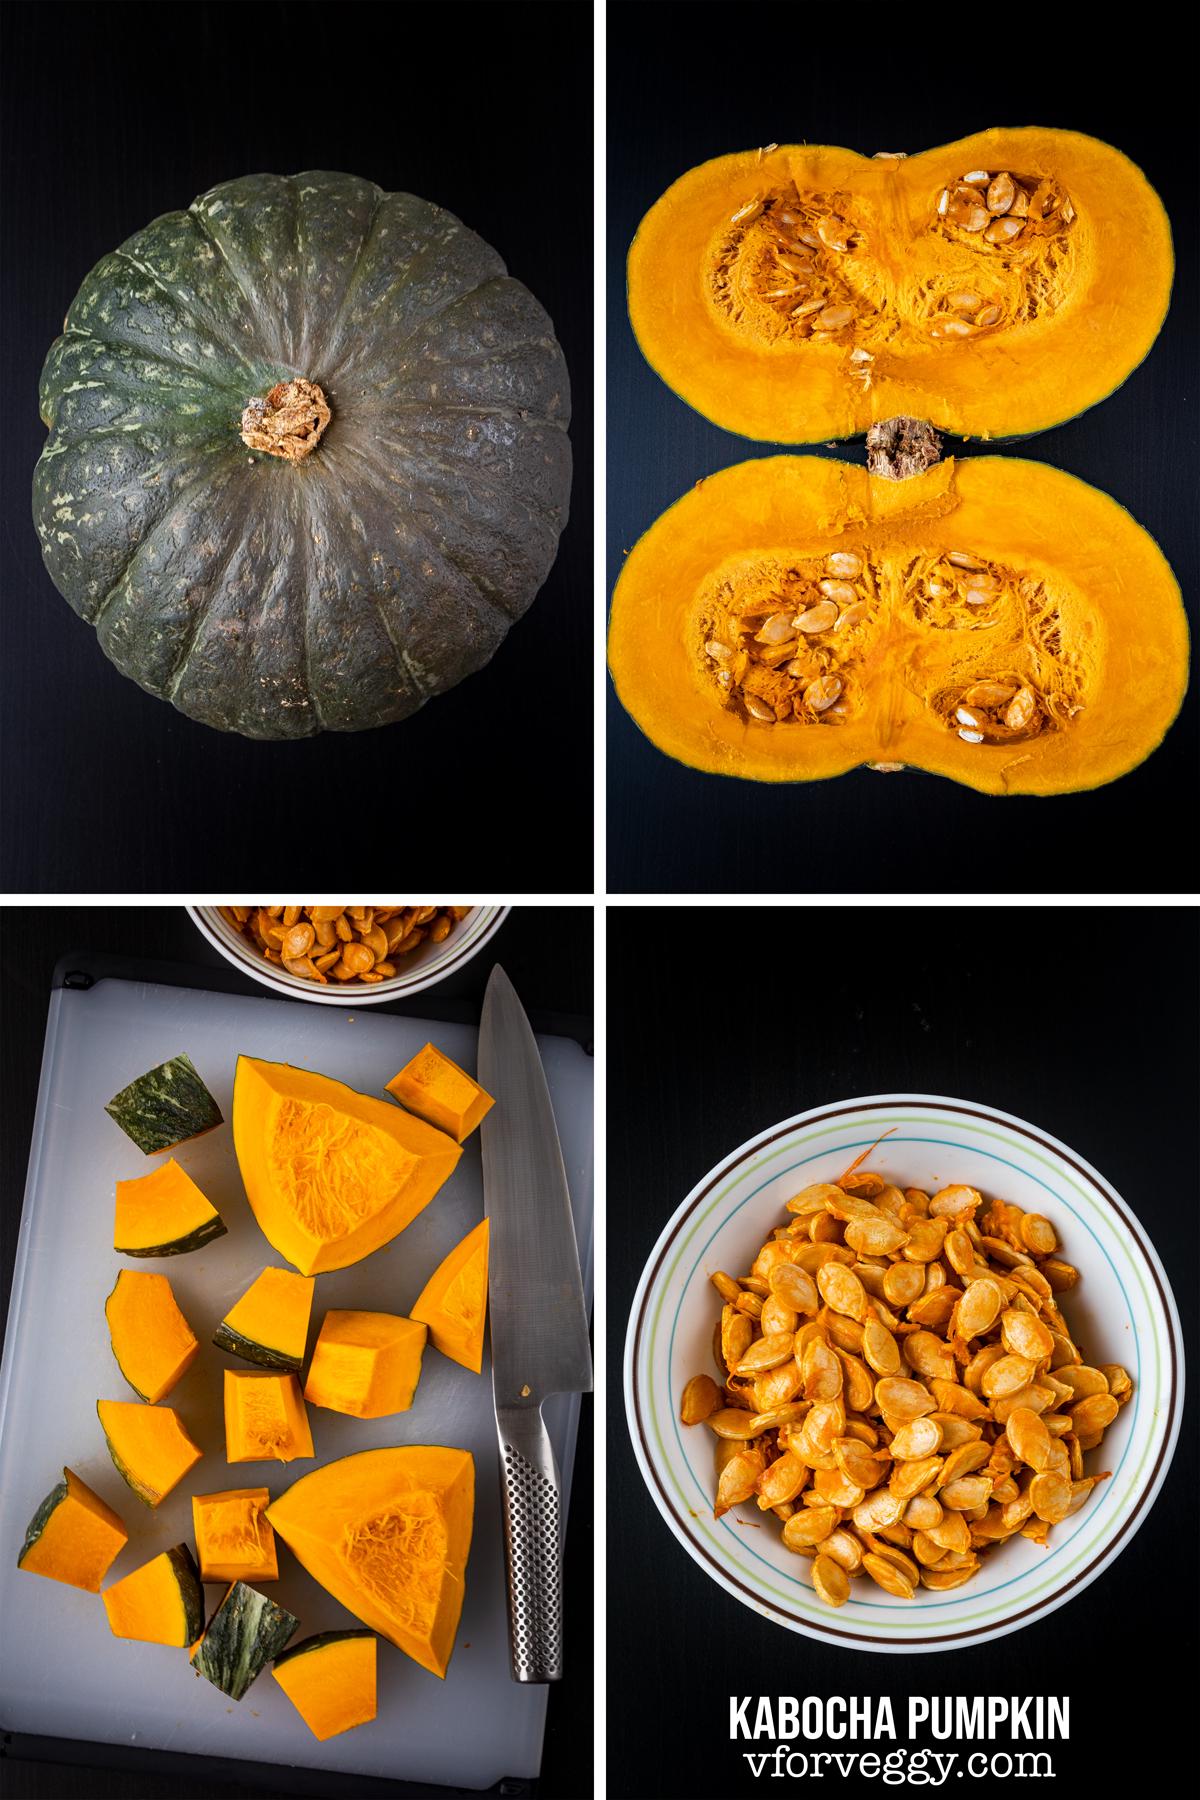 (1) Whole kabocha pumpkin. (2) Kabocha pumpkin cut into two halves. (3) Kabocha pumpkin flesh. (4) Kabocha pumpkin seeds.